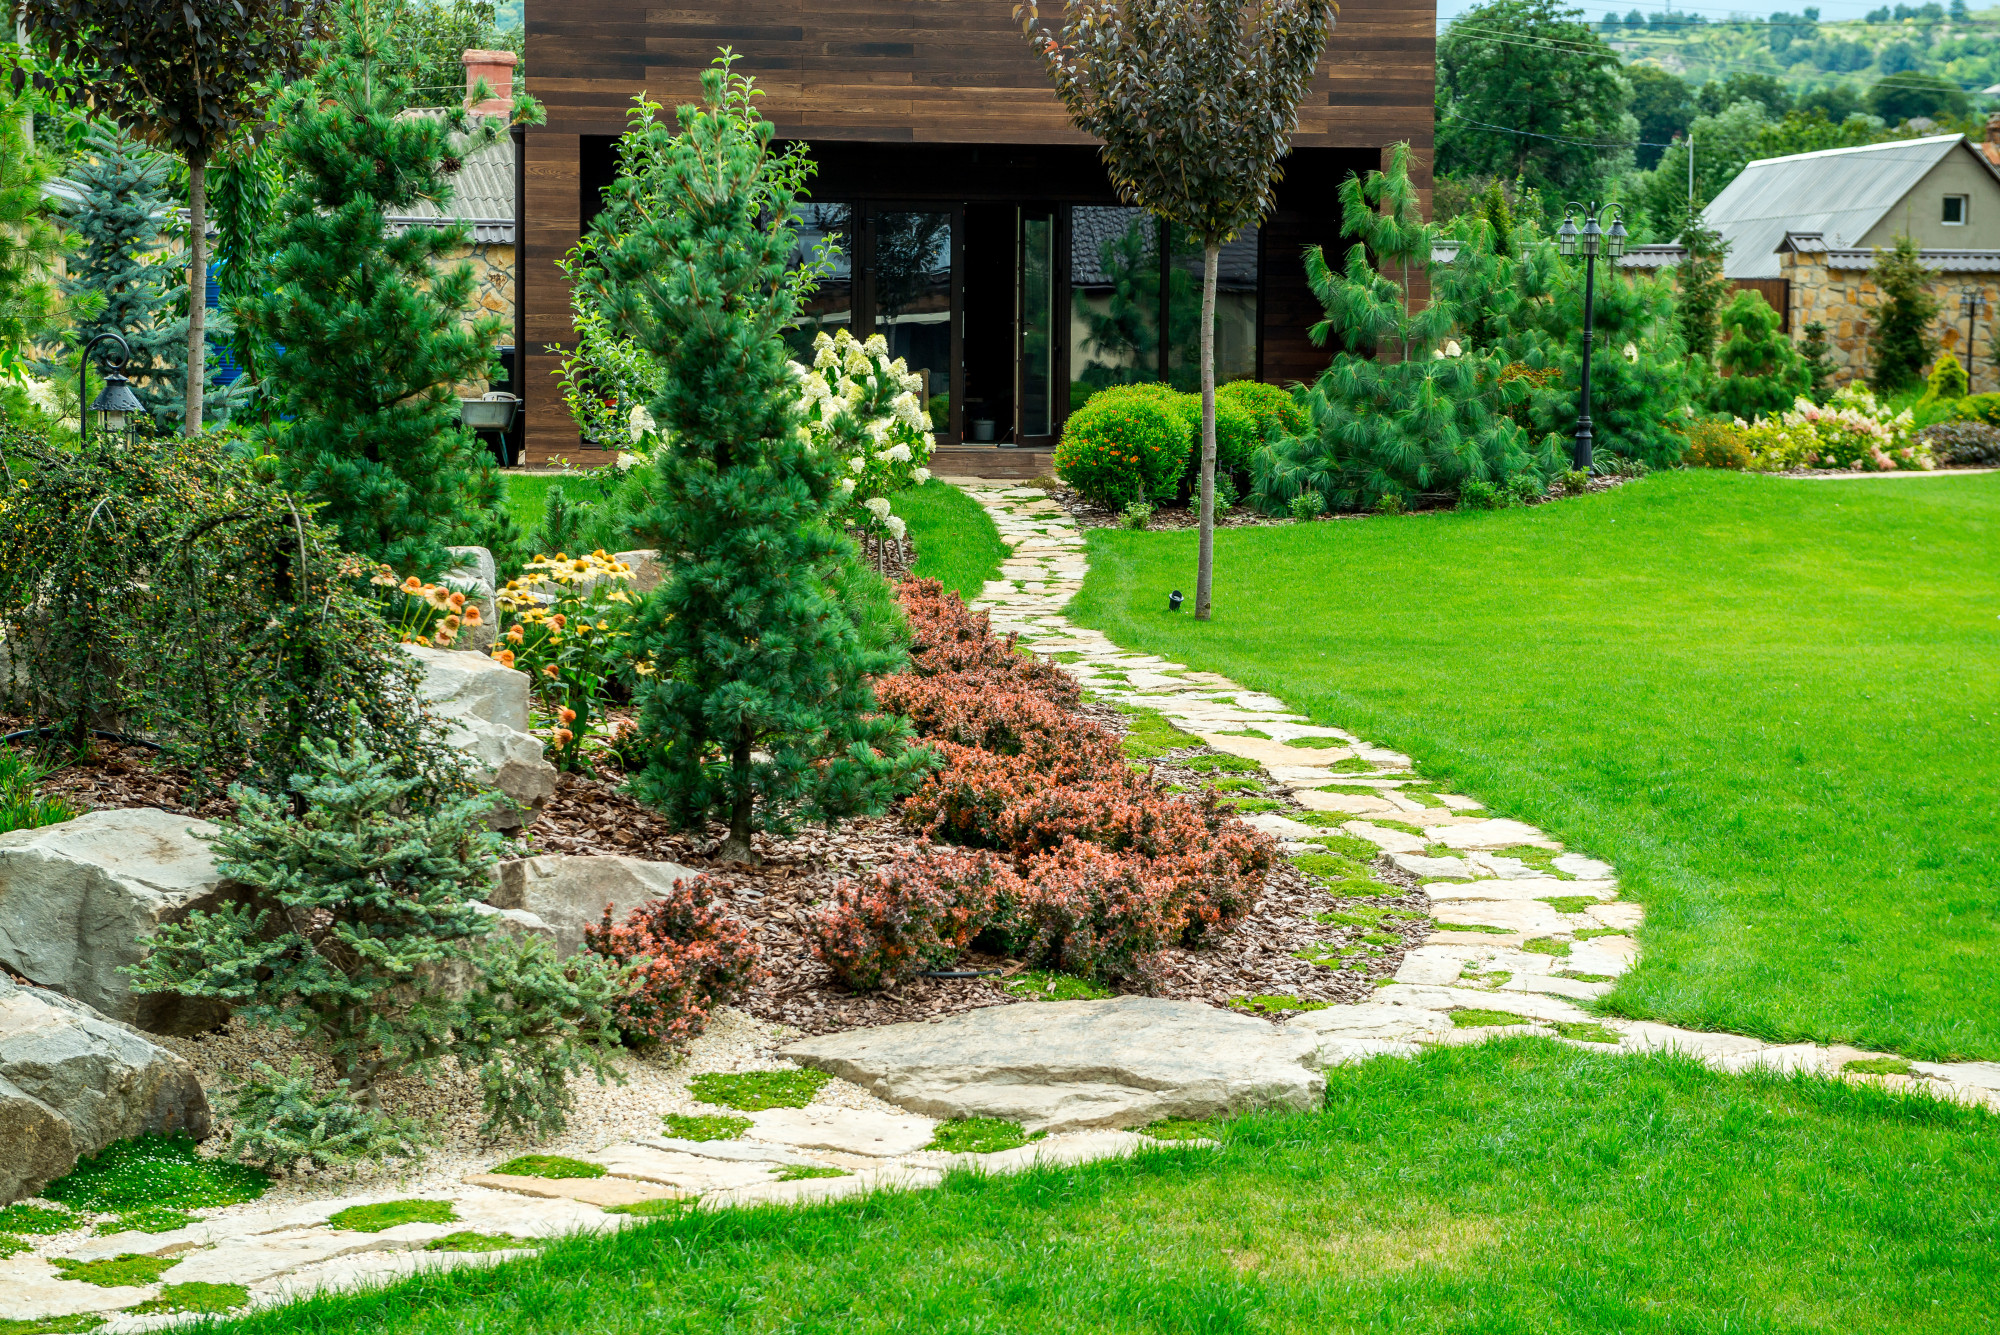 3 Simple Backyard Design Ideas on a Budget for an Outdoor Utopia - Interior Design Inspiration